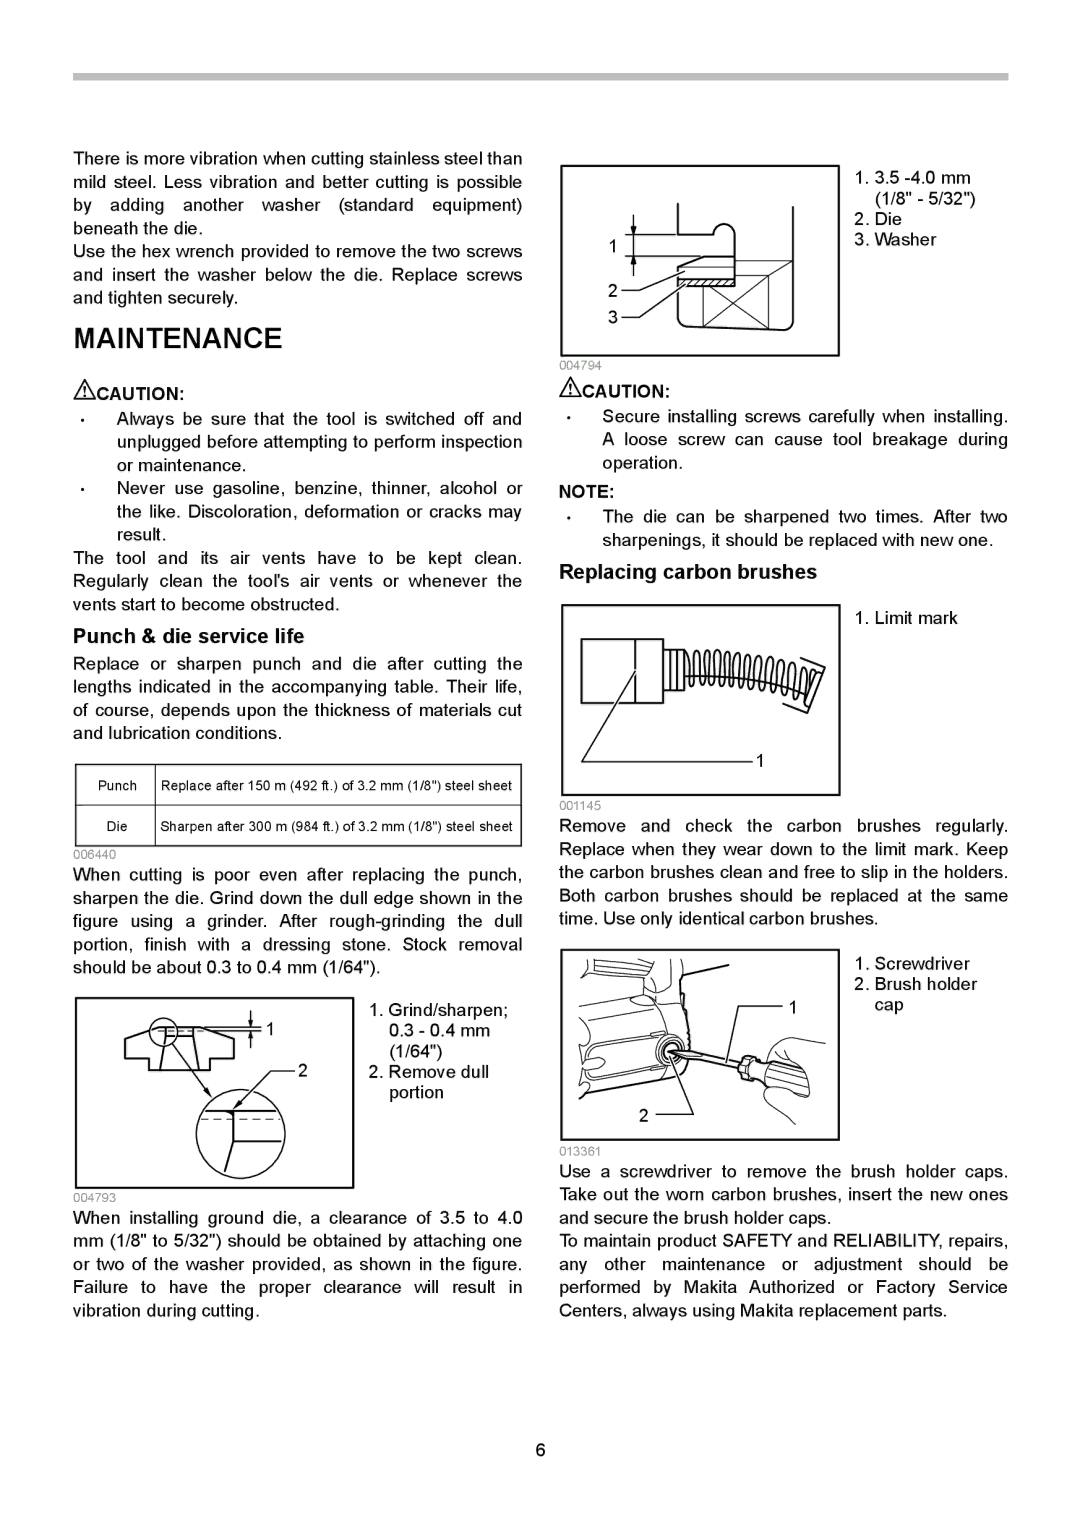 Makita JN3201 instruction manual Maintenance, Punch & die service life, Replacing carbon brushes 